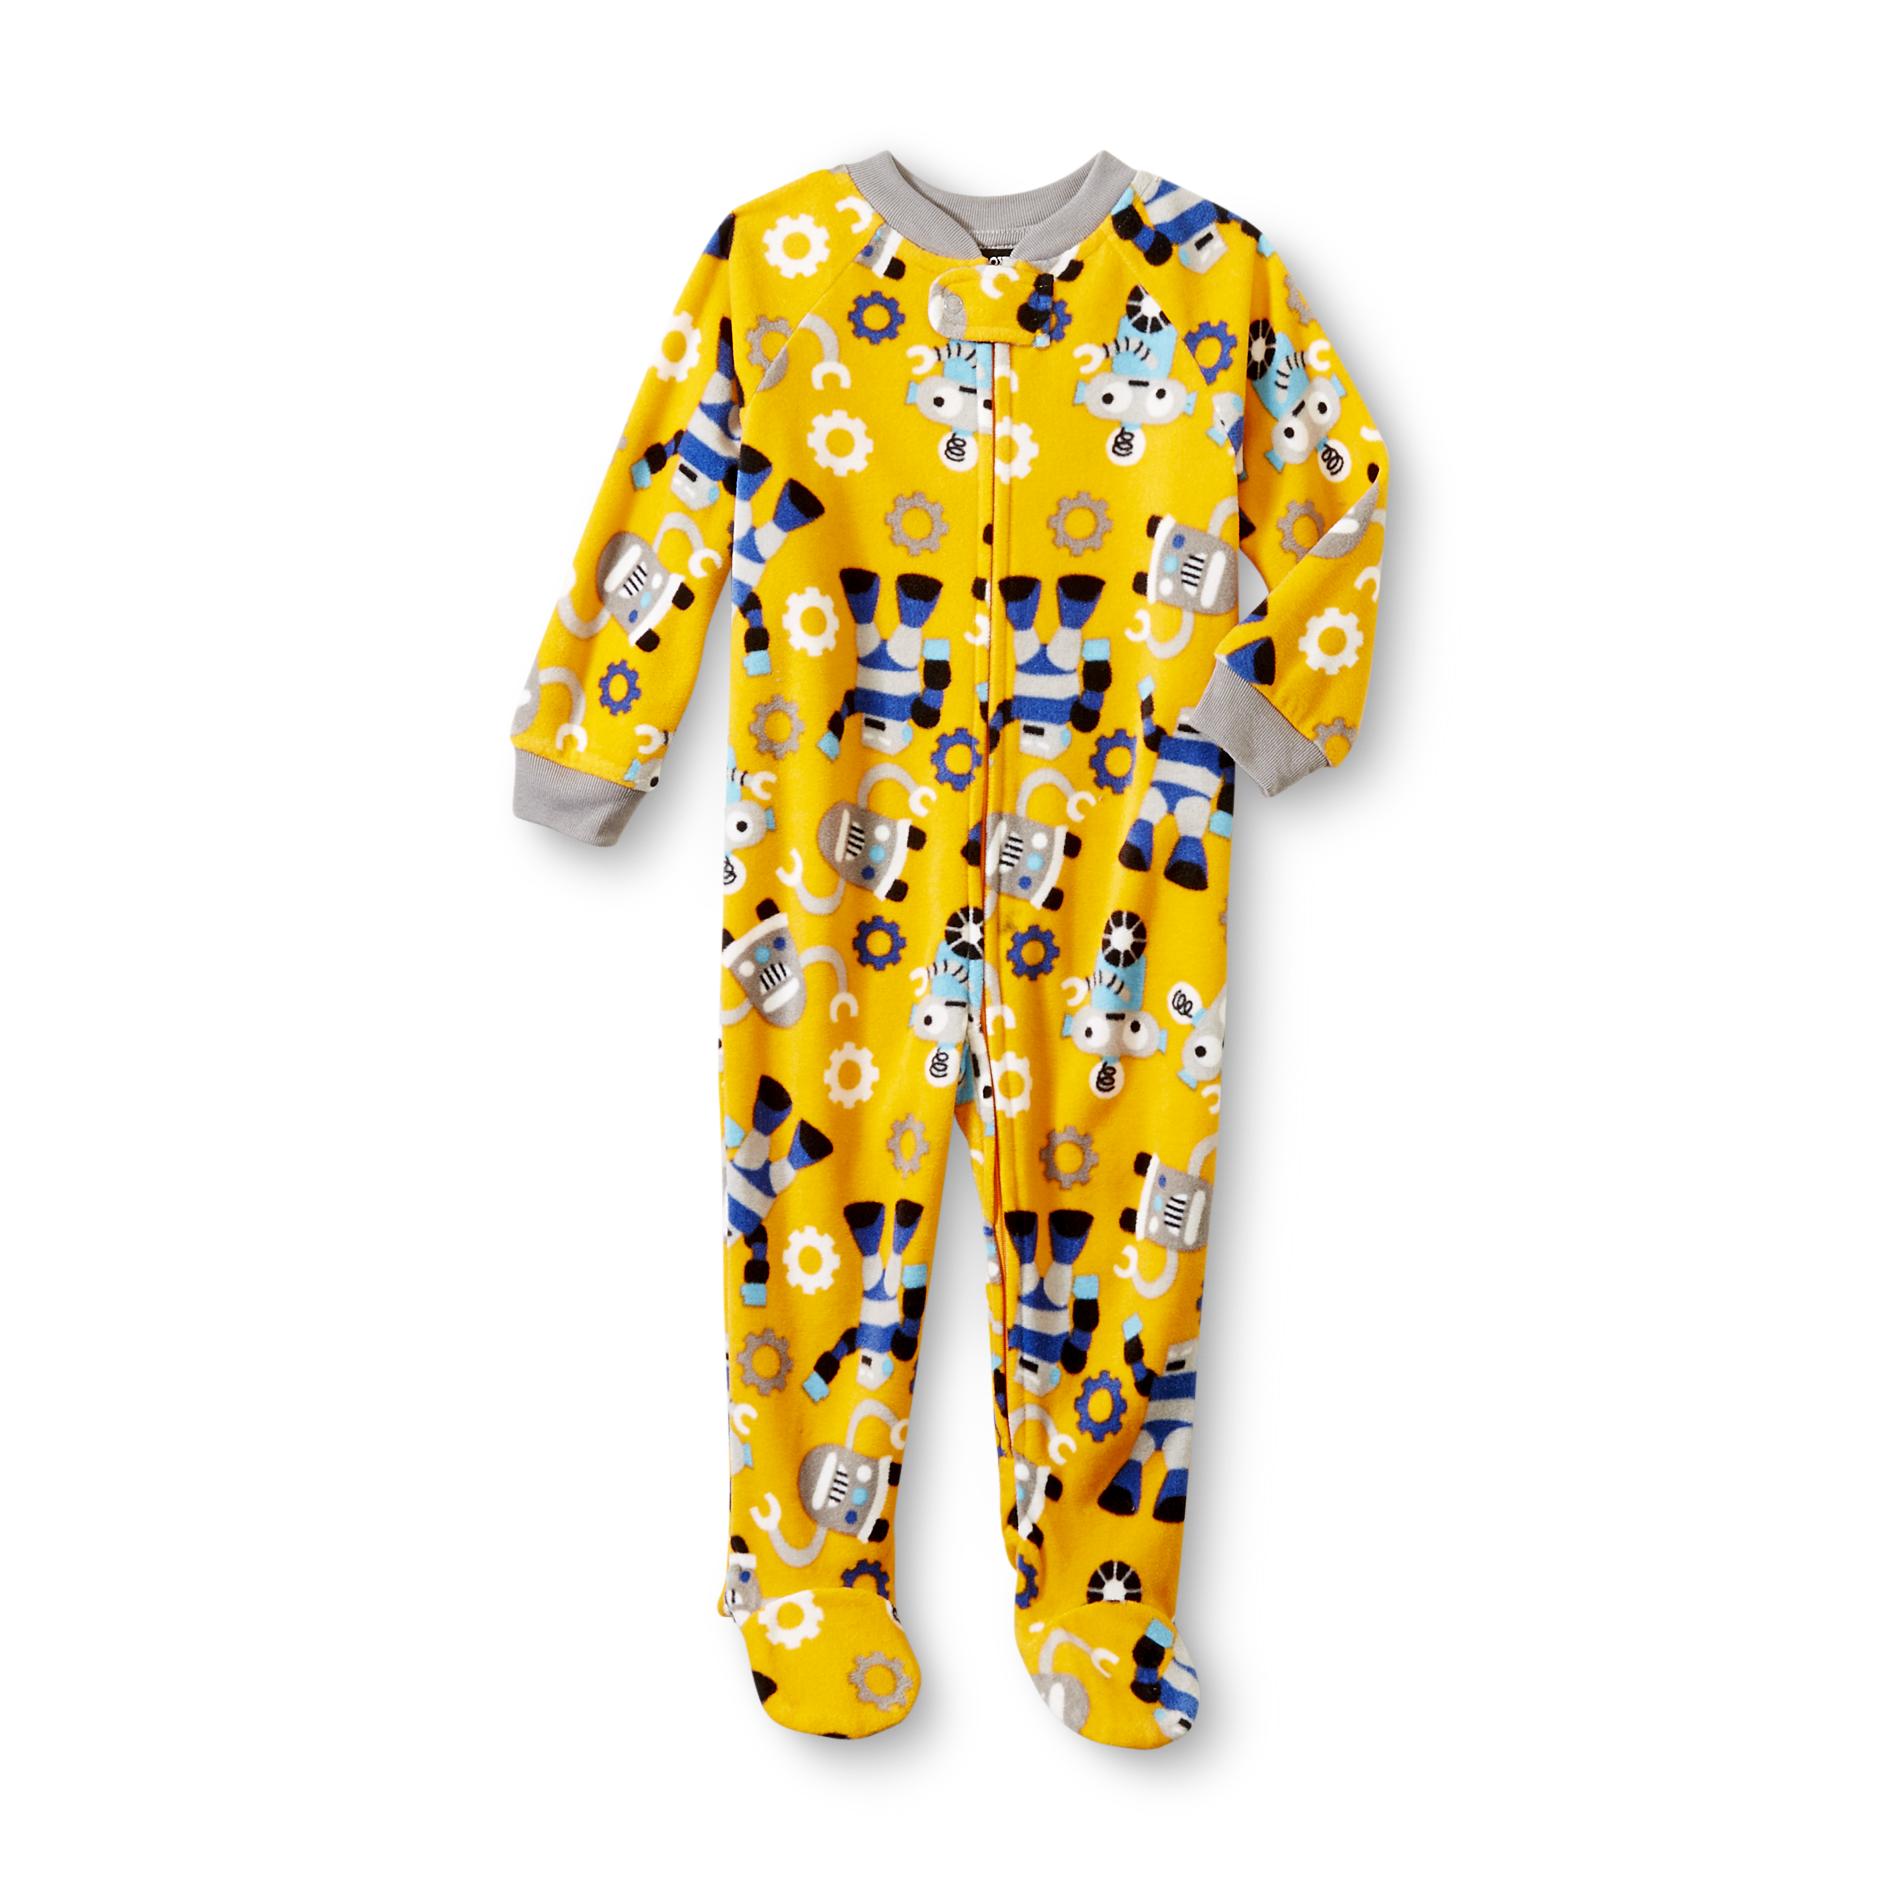 Joe Boxer Infant & Toddler Boy's Fleece Sleeper Pajamas - Robots